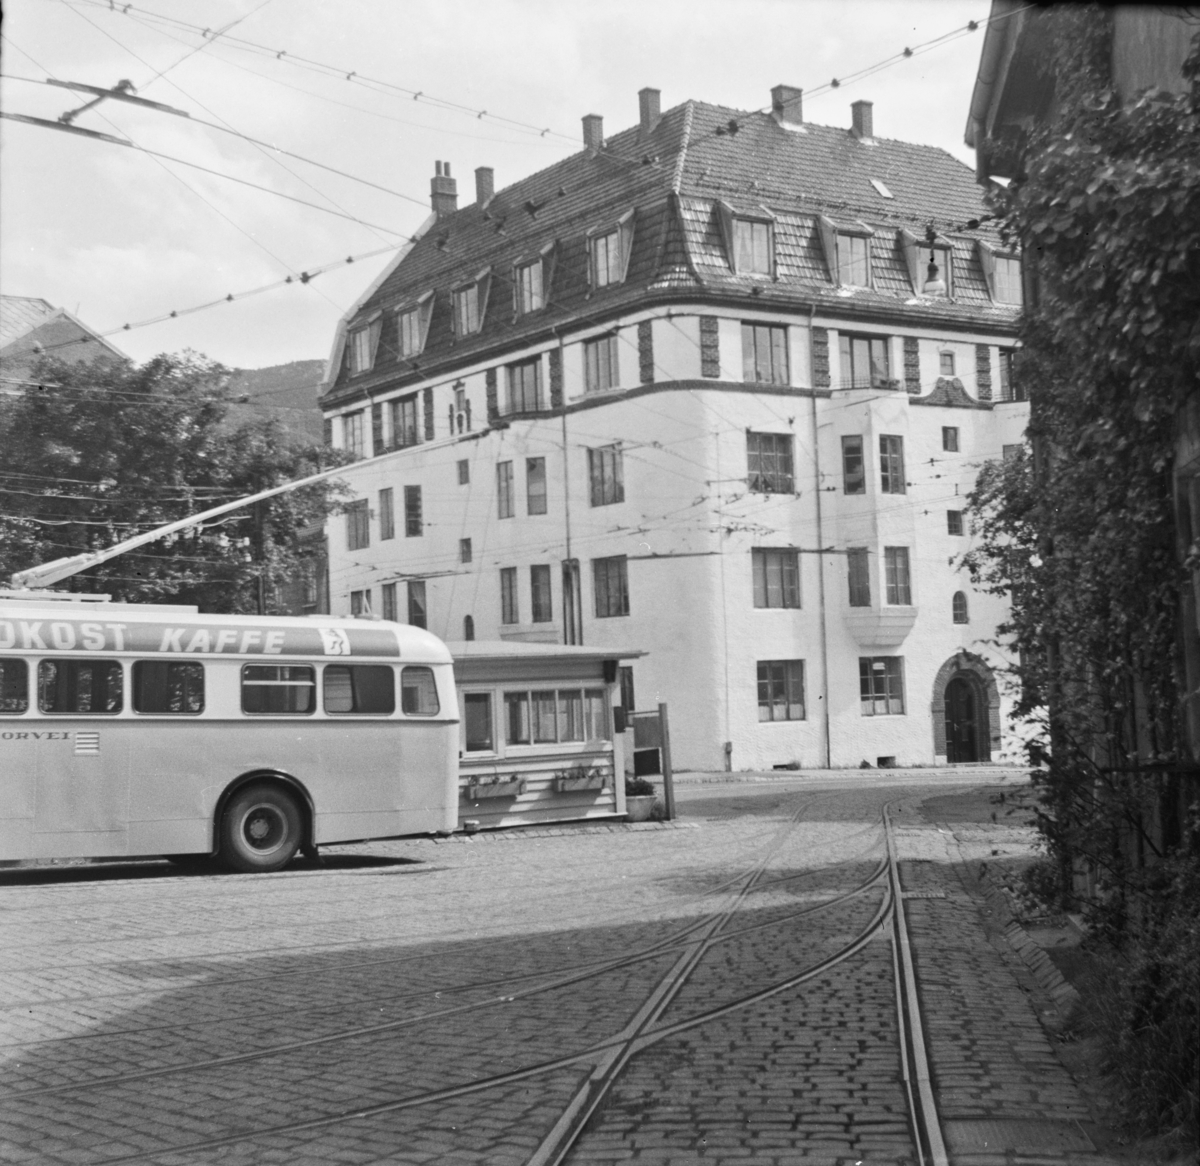 Bergen Sporveiers trikkestall ble gjort om til garasje for trolleybusser. Her sees en trolleybyss type Munch utenfor garasjen.